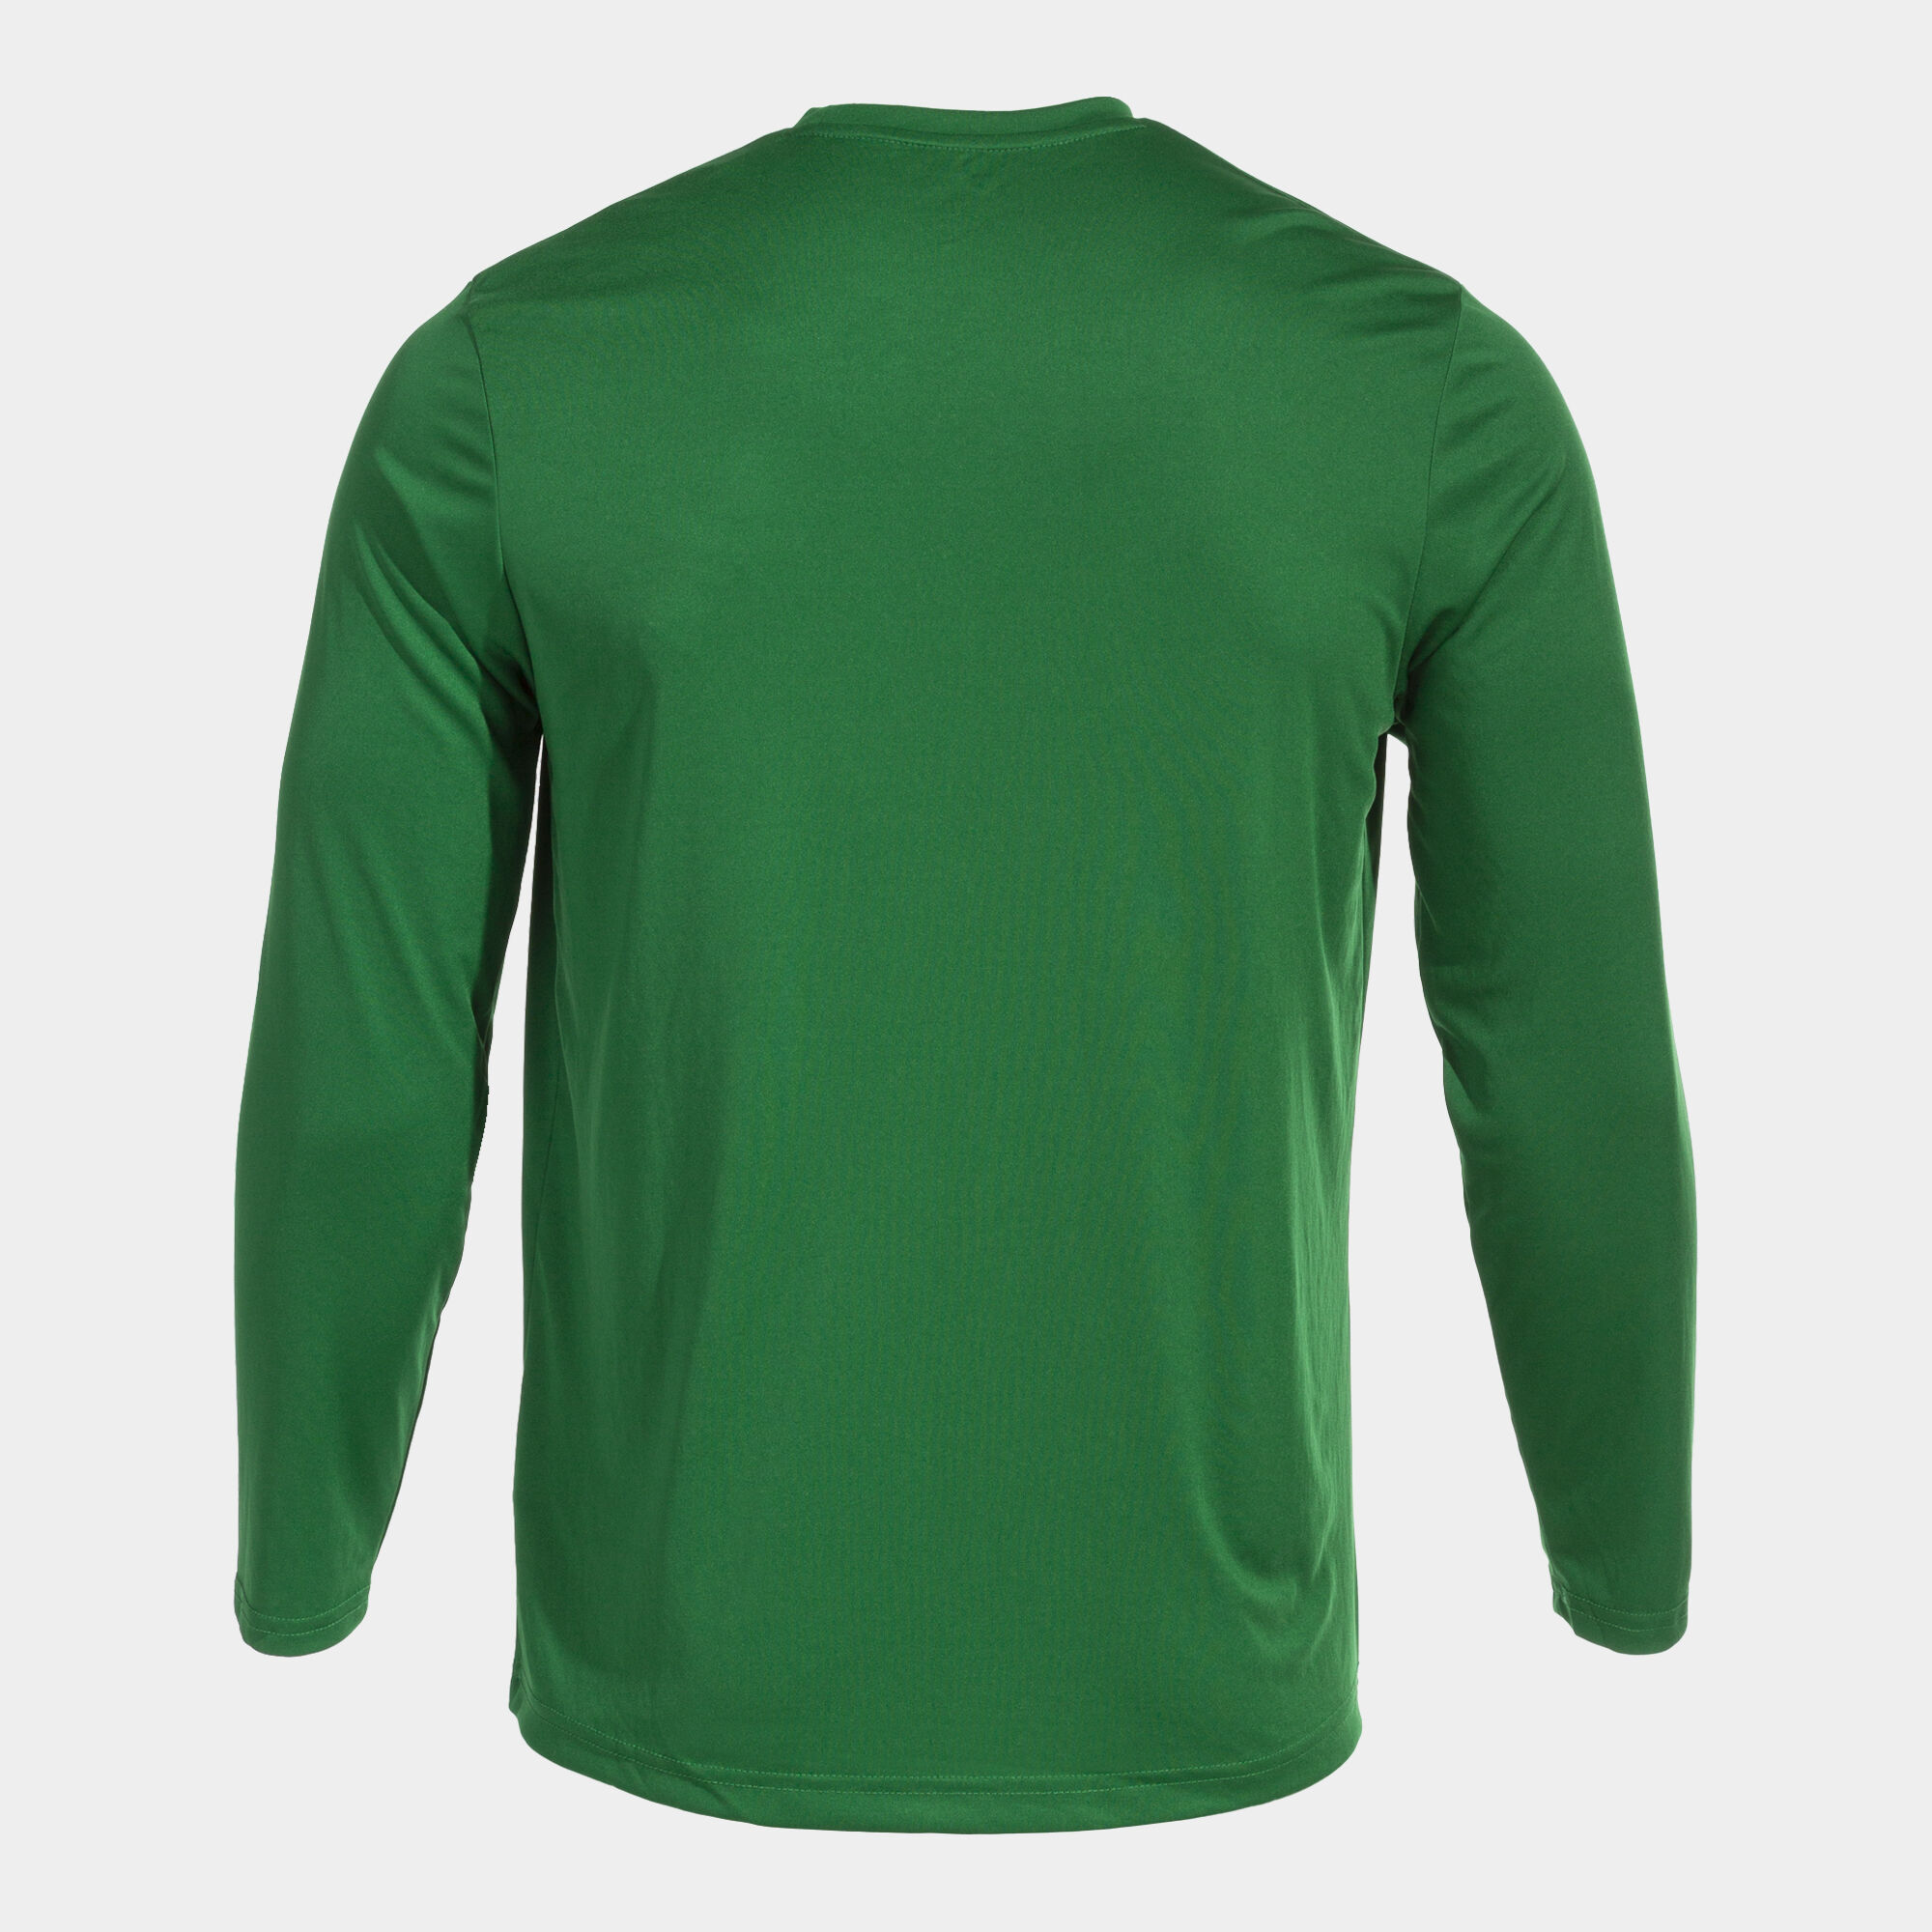 Camiseta manga larga hombre Combi verde